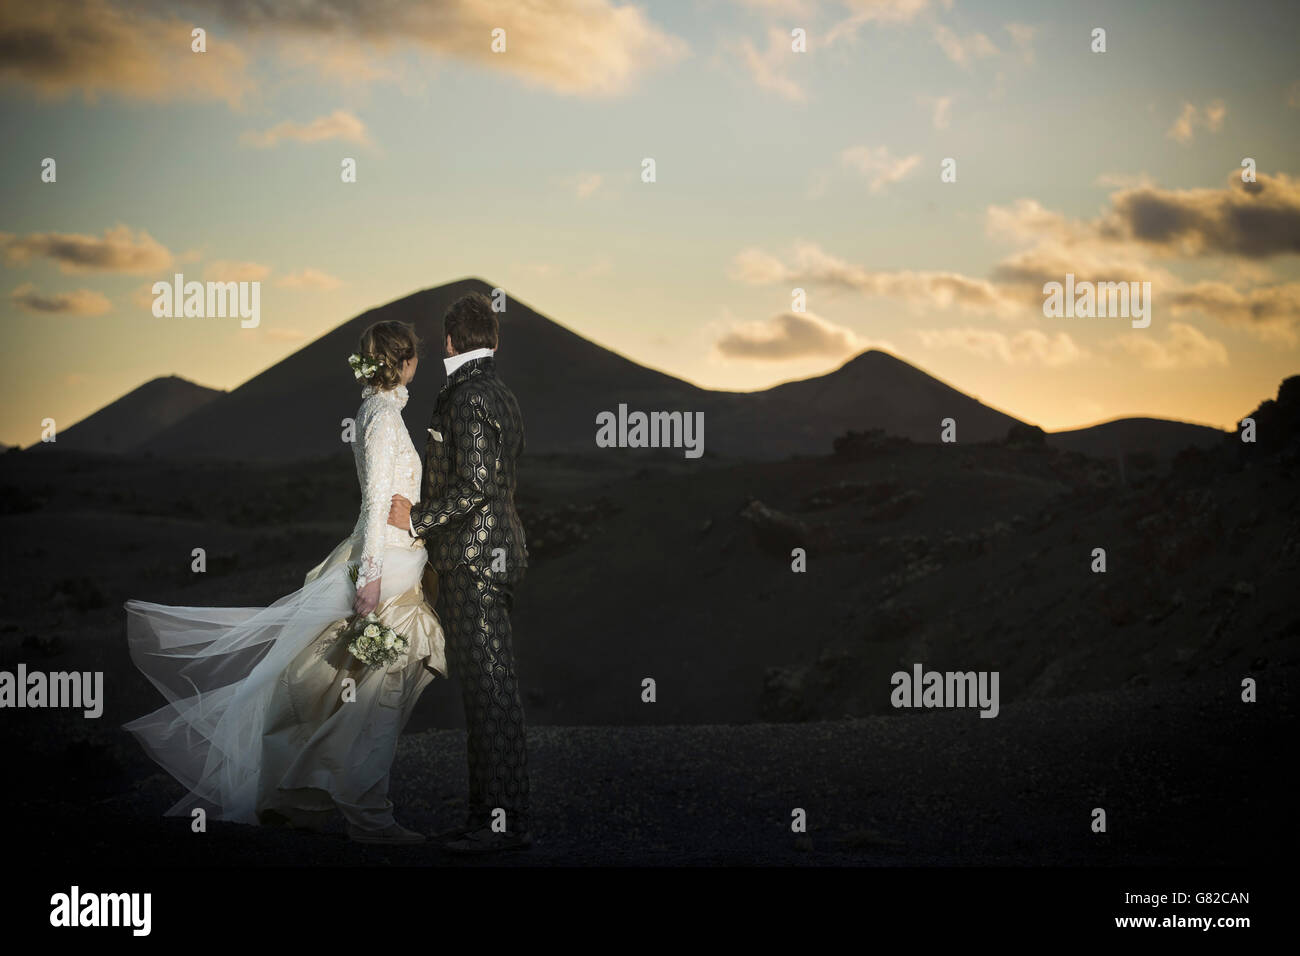 Full length side view of loving bridge and groom standing on volcanic landscape during sunset Stock Photo